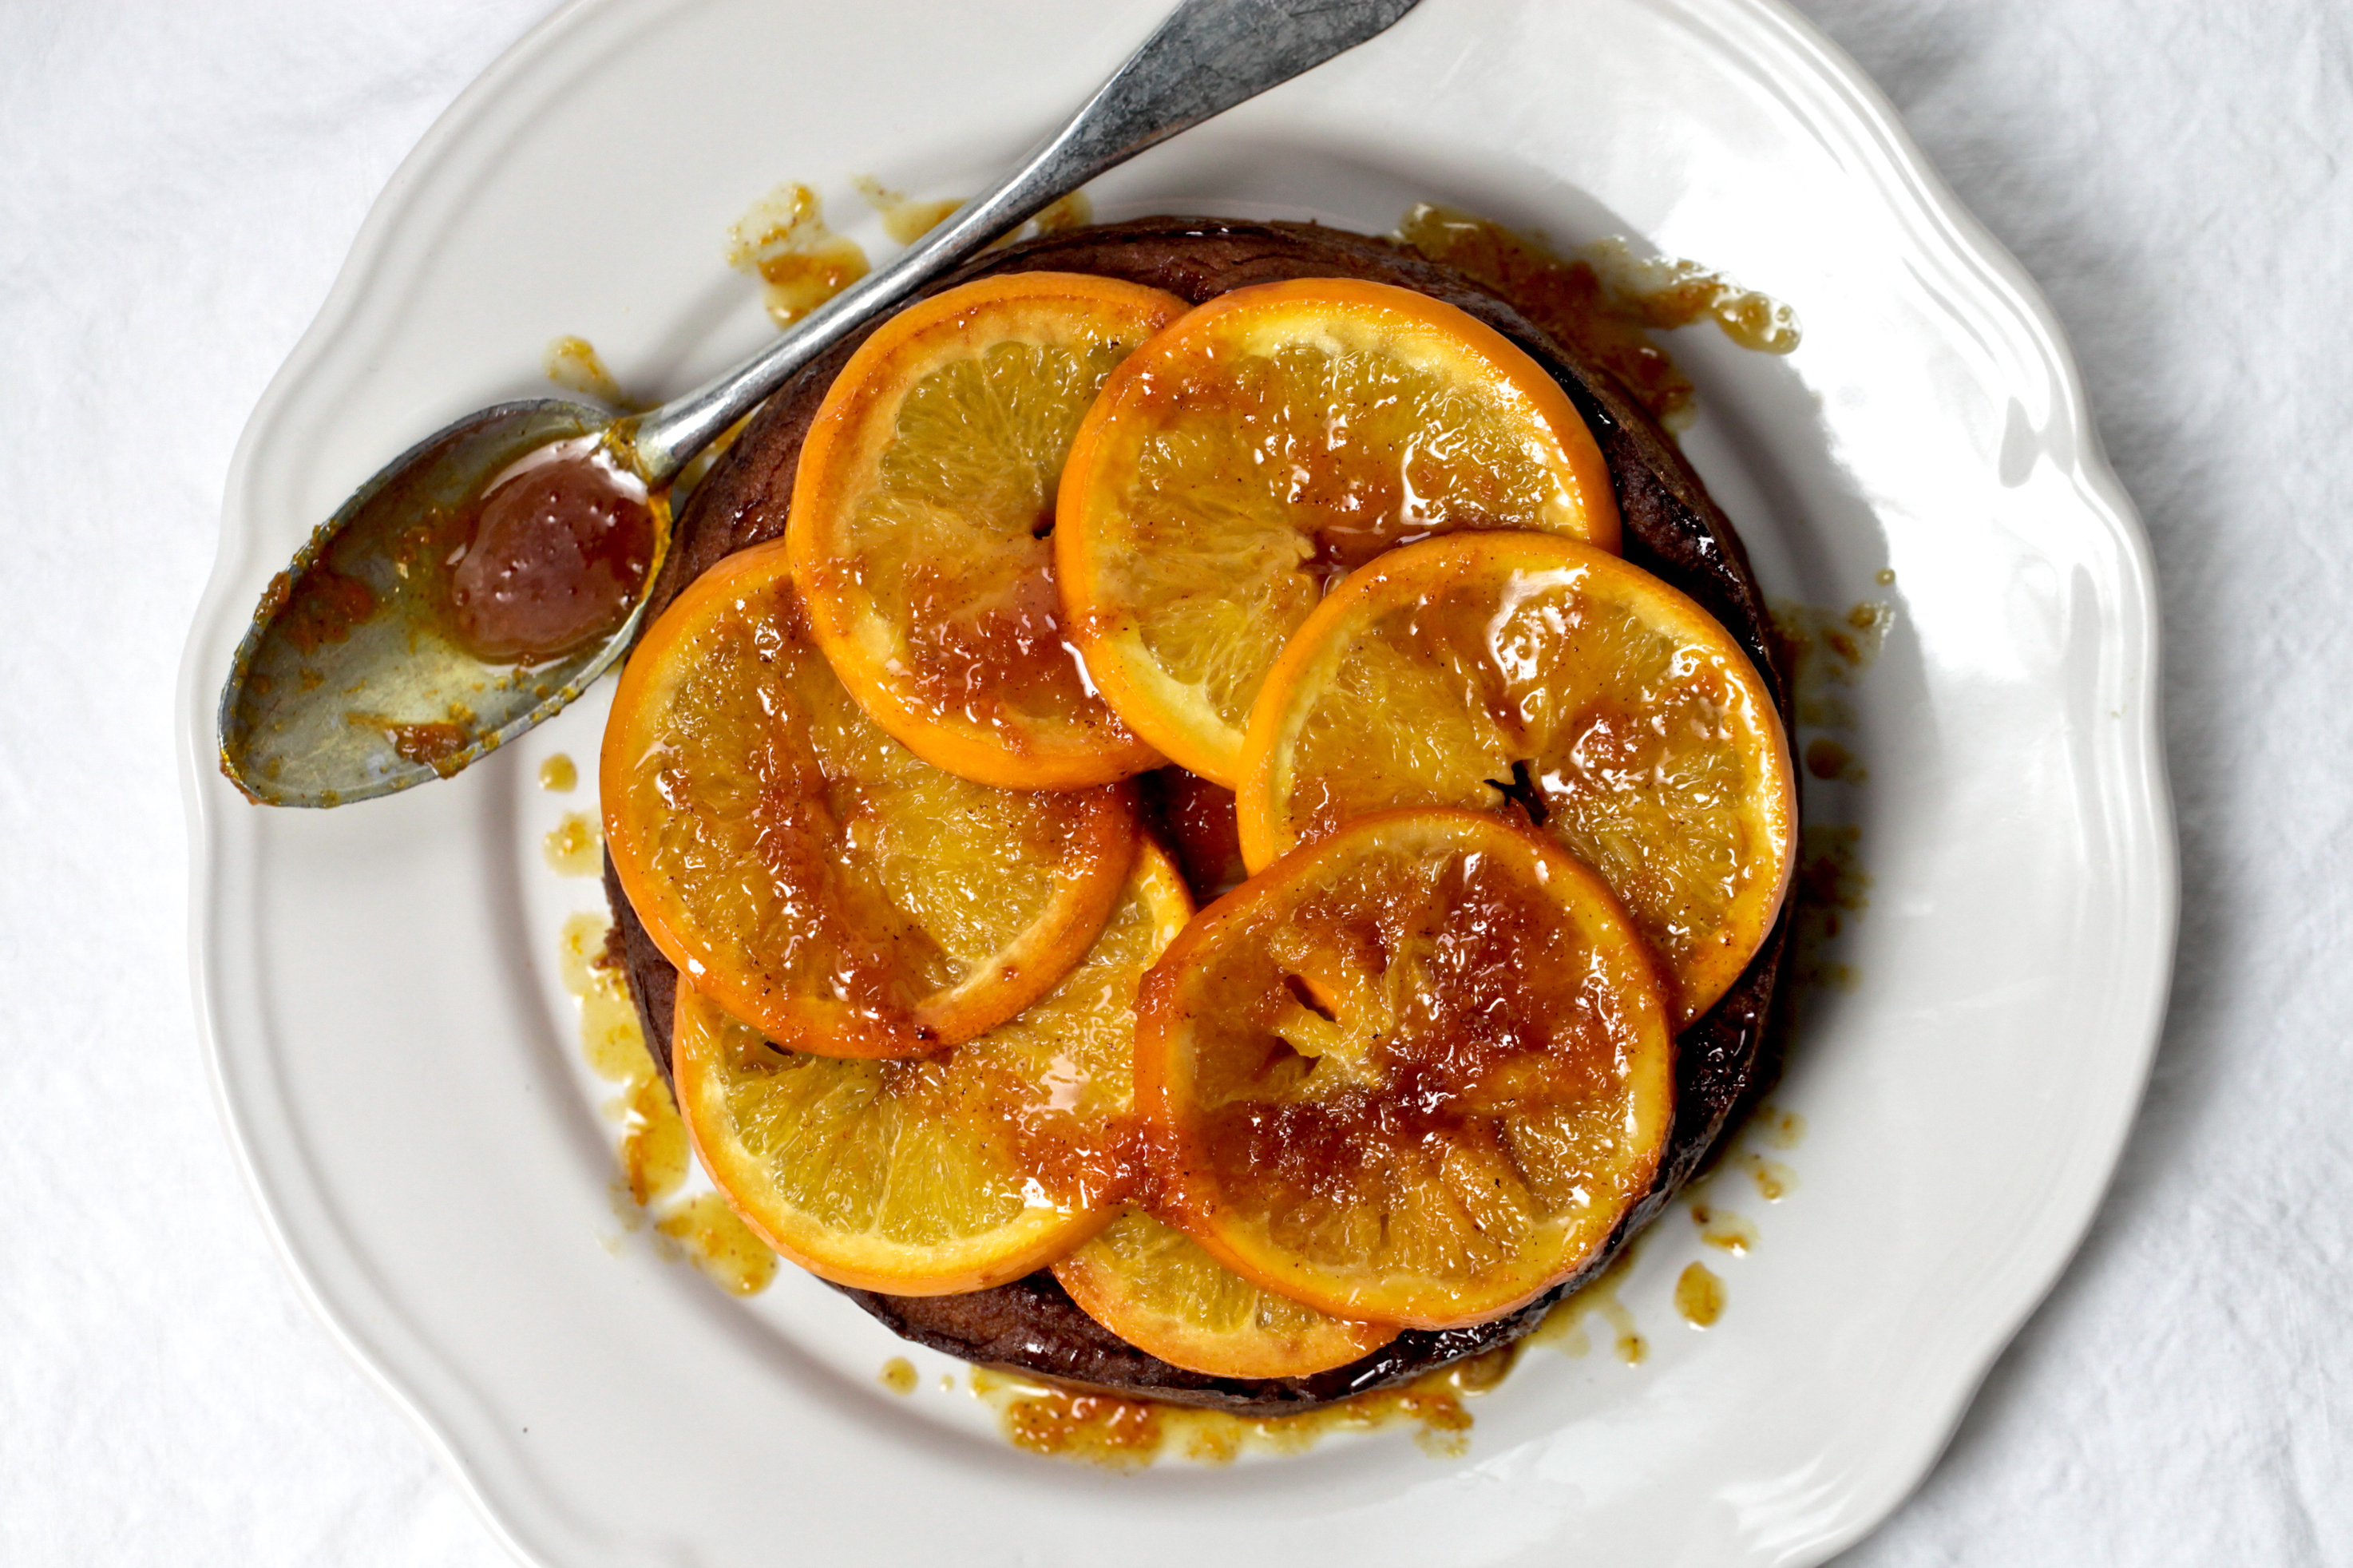 Flourless orange cake by Teresa Cutter of The Healthy Chef. (Paul Cutter / The Healthy Chef)